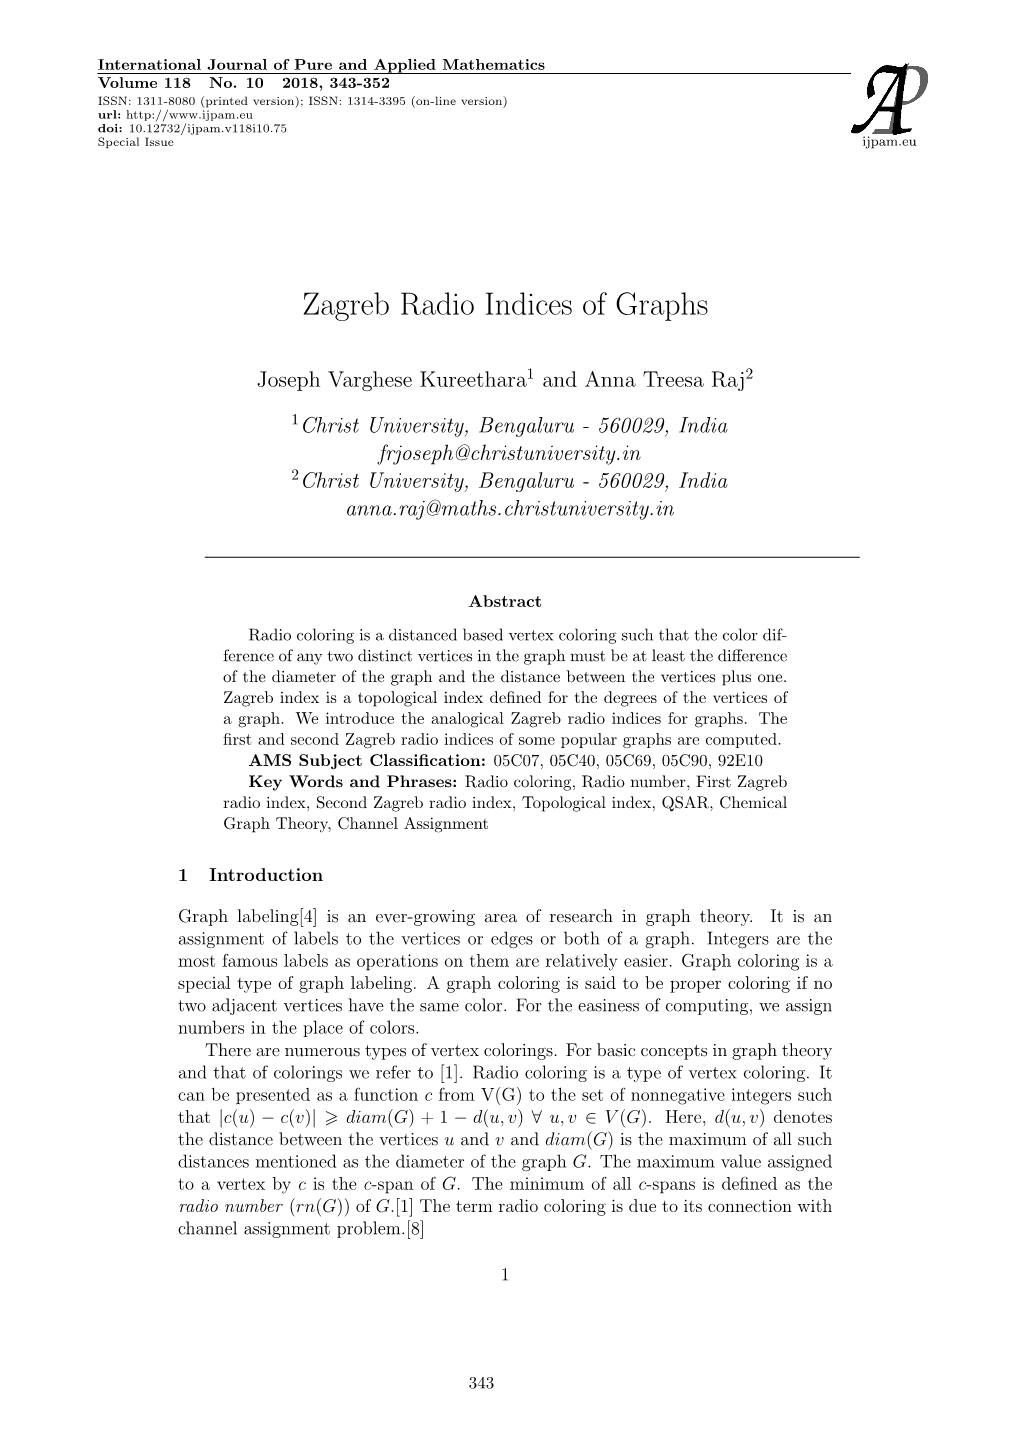 Zagreb Radio Indices of Graphs